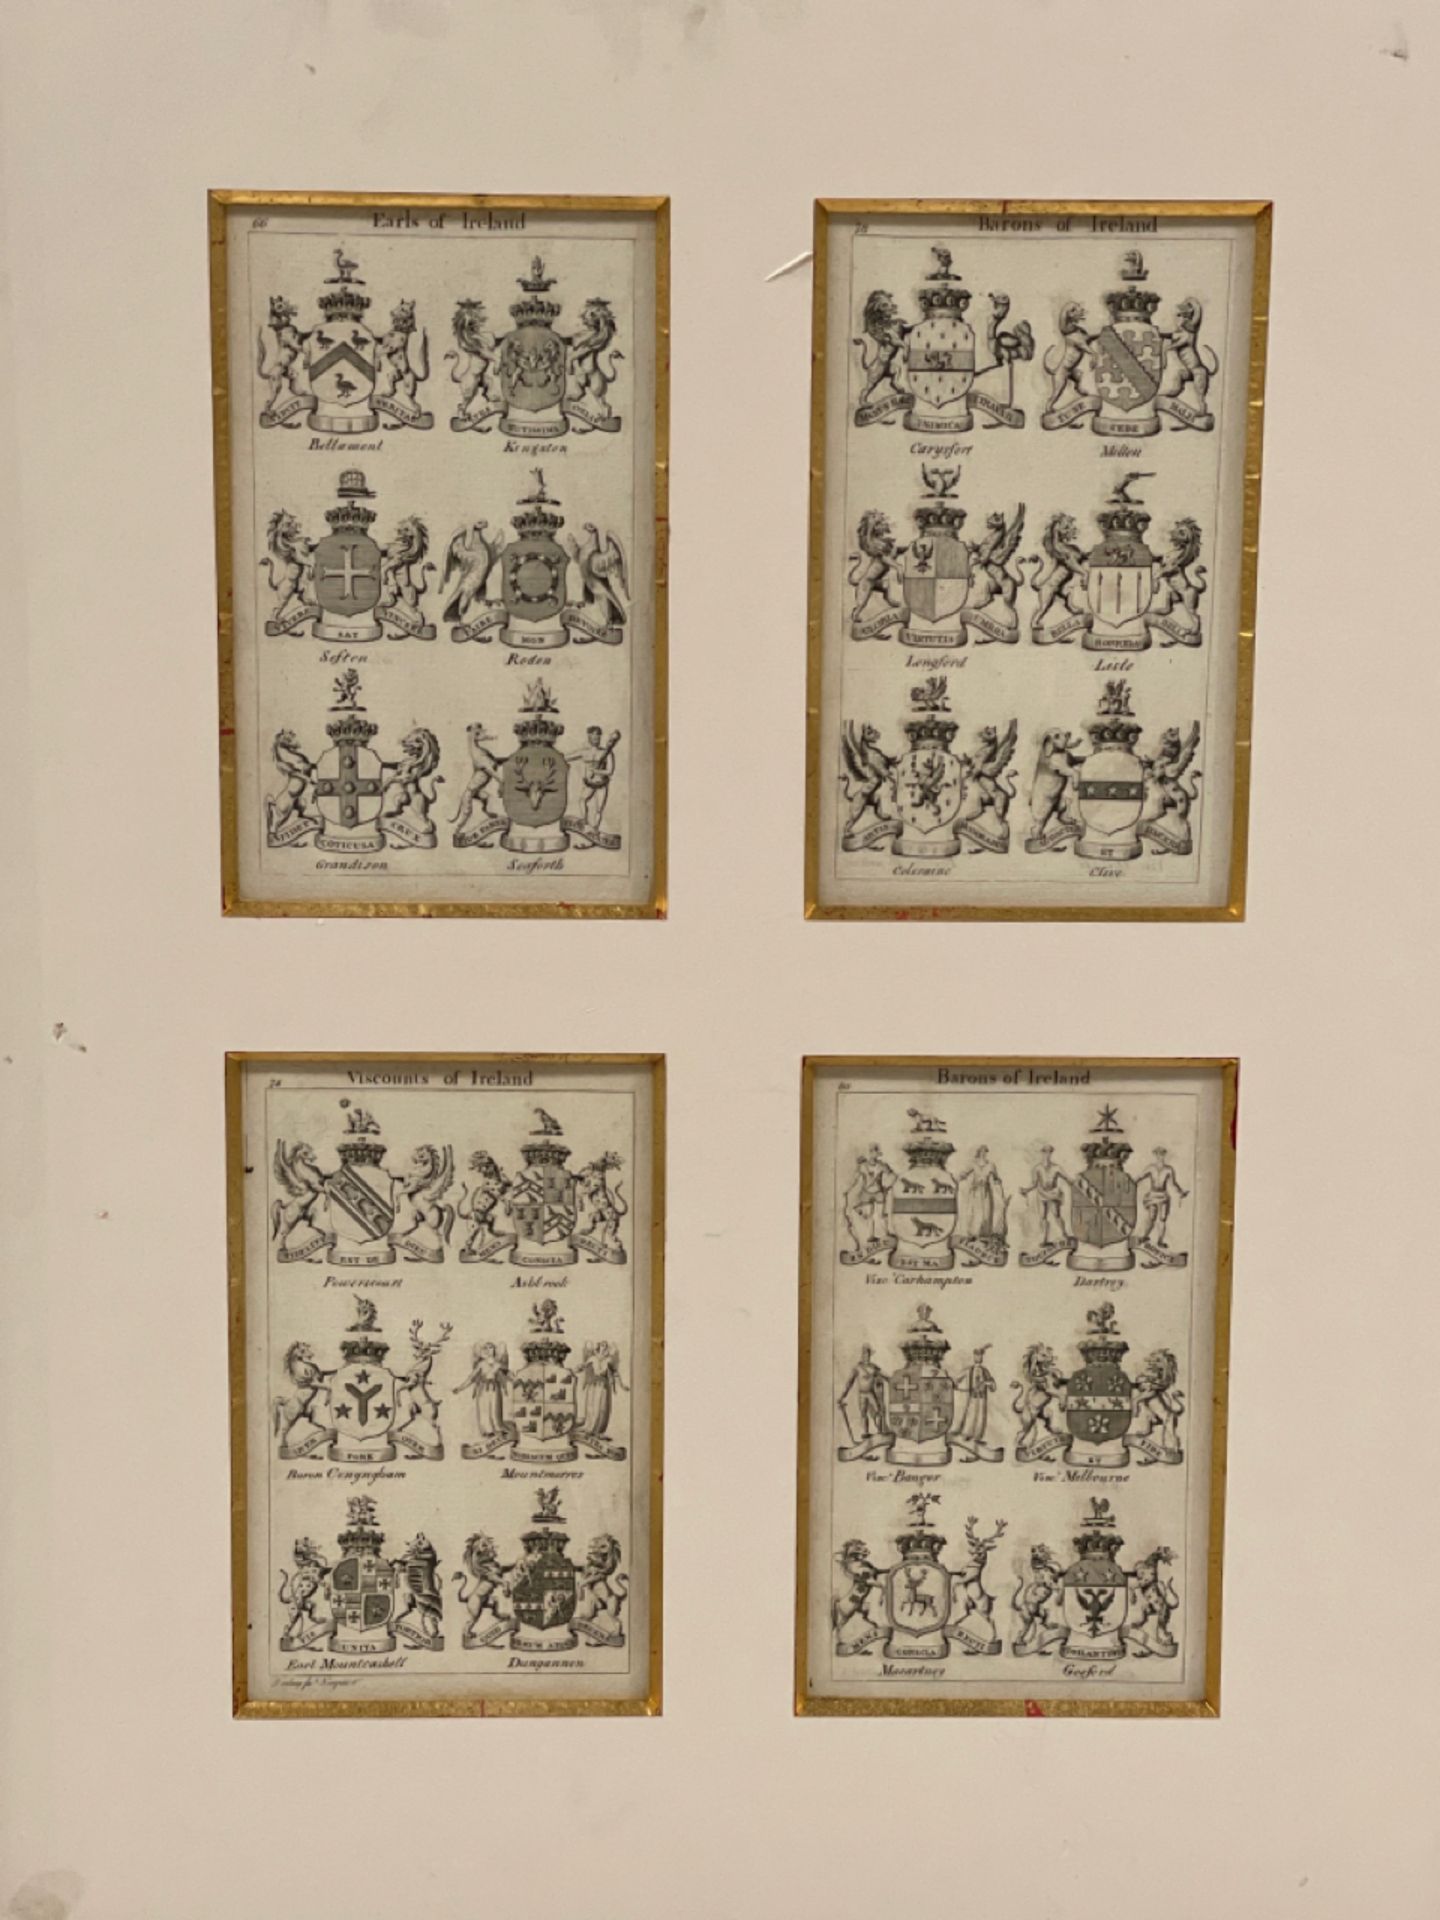 Artwork Print - Irish Coat Of Arms From Claridge's Hotel - Image 2 of 2